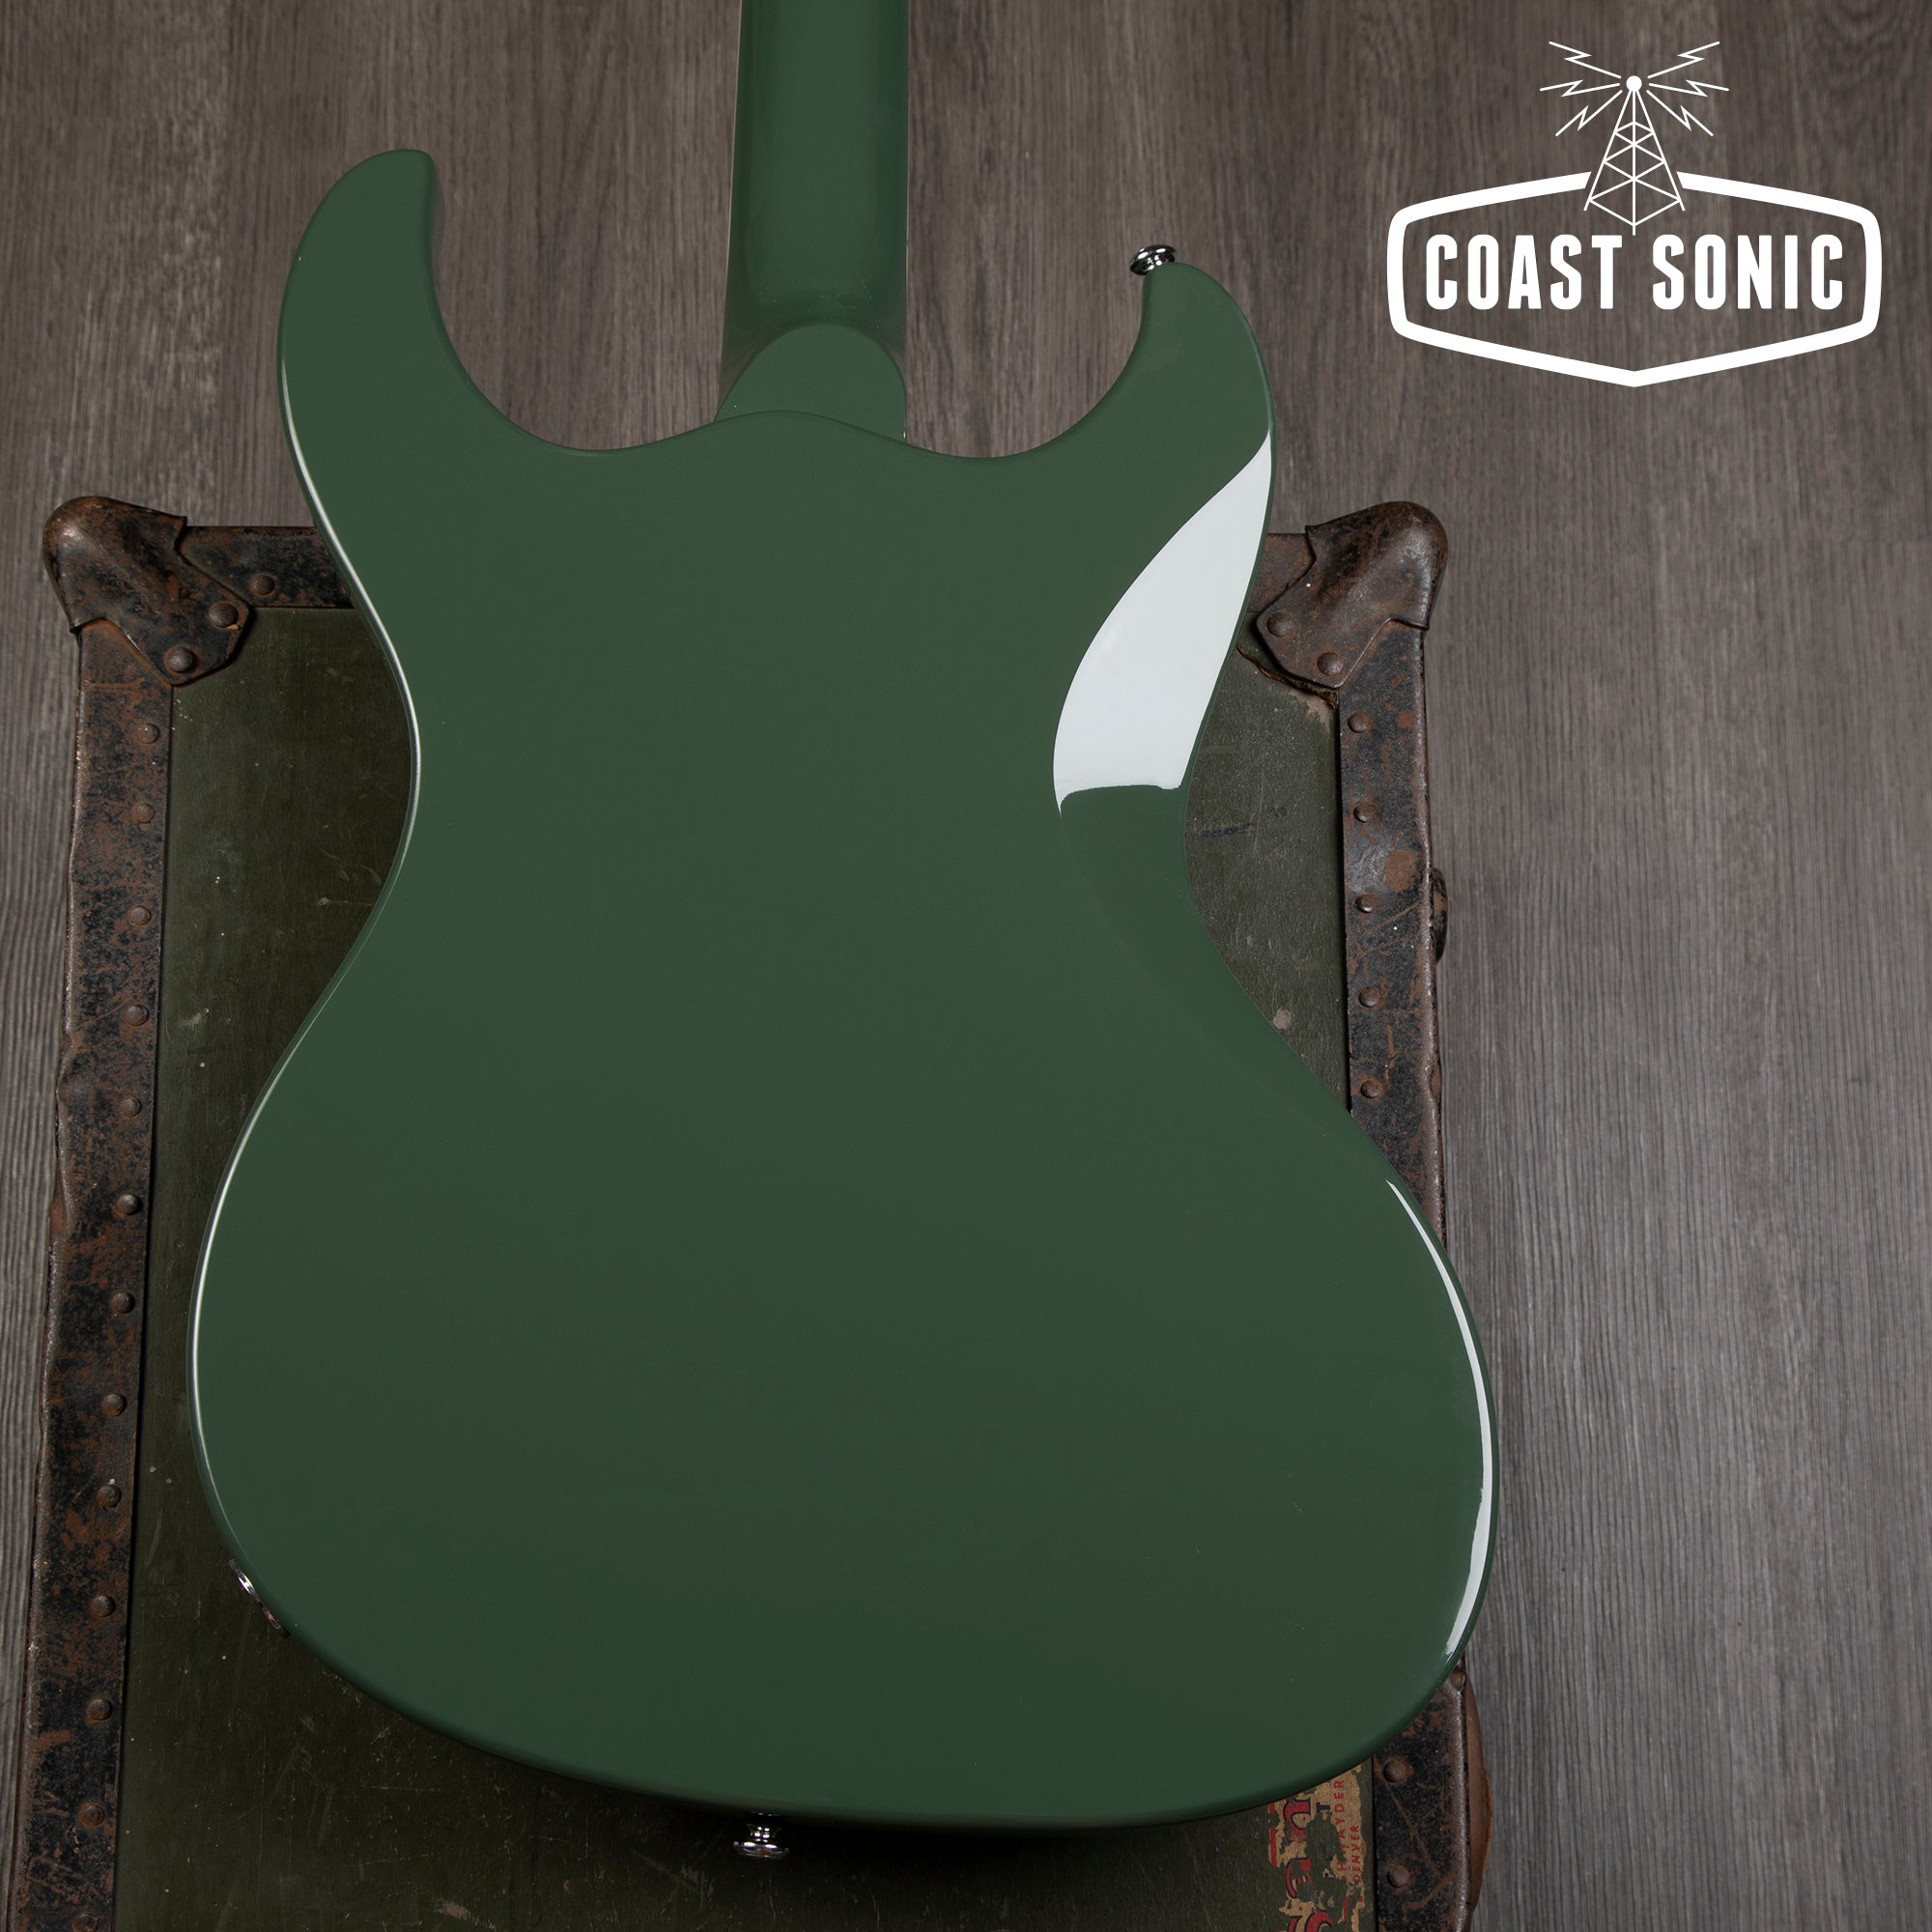 Dunable Guitars Gnarwhal DE - Olive Green